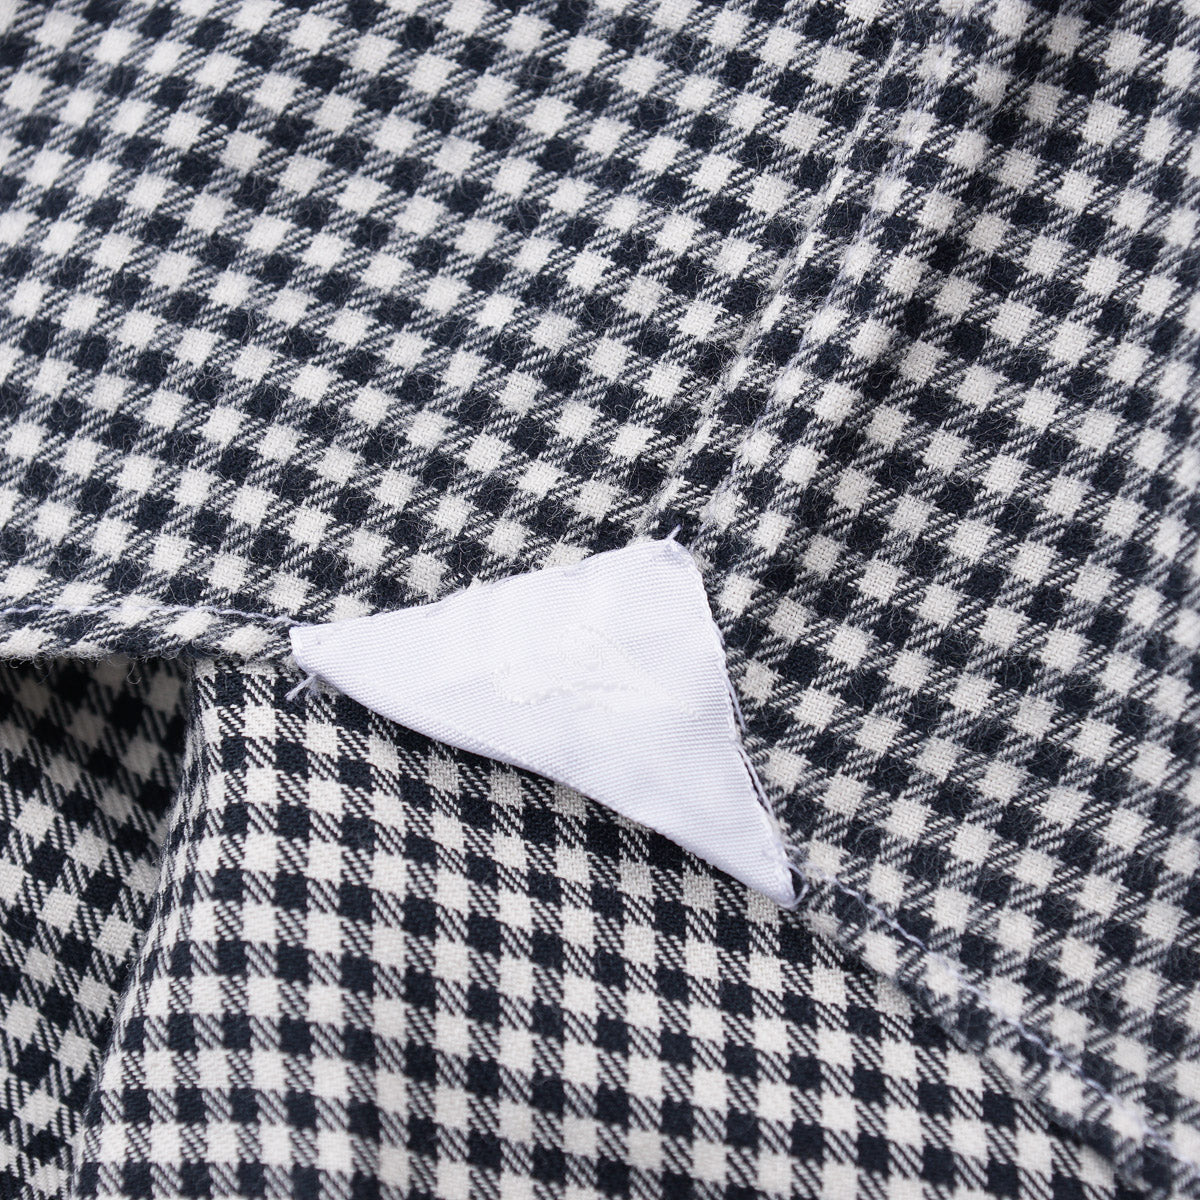 Finamore Extra-Soft Lightweight Flannel Shirt - Top Shelf Apparel